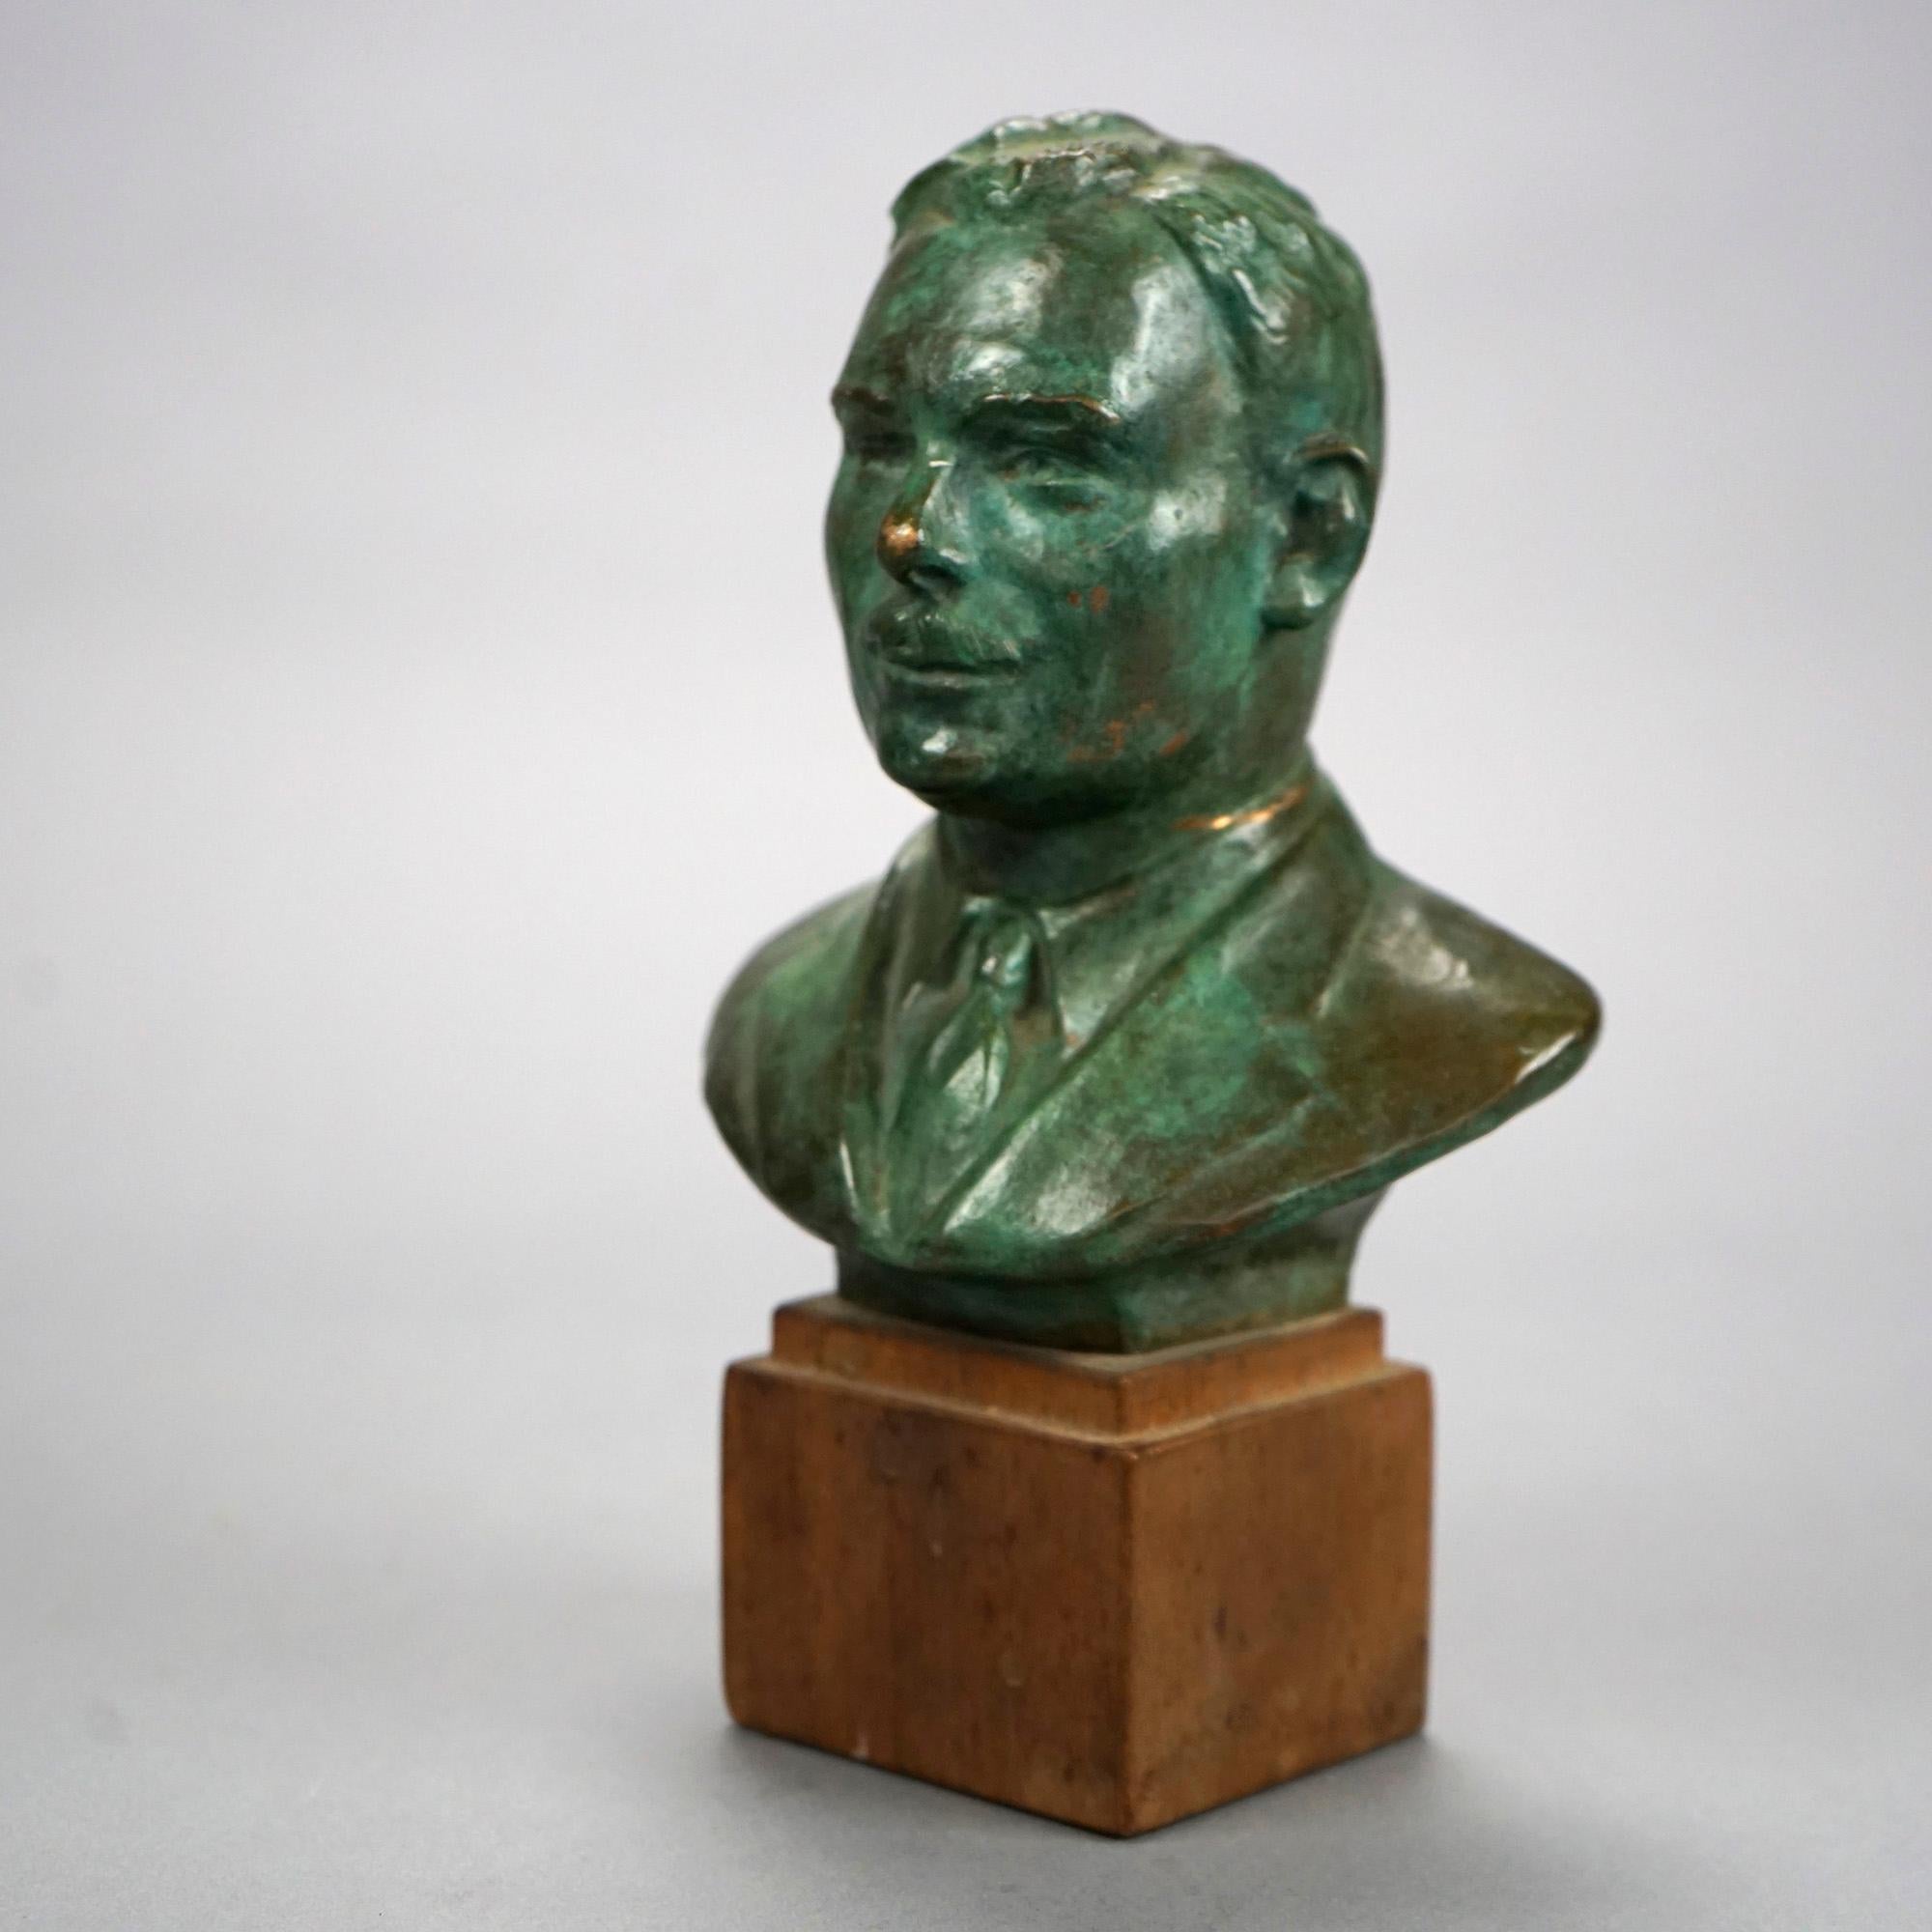 20th Century Bronze Bust Portrait Sculpture of a Man on Wooden Plinth by John Terkeni 20th C